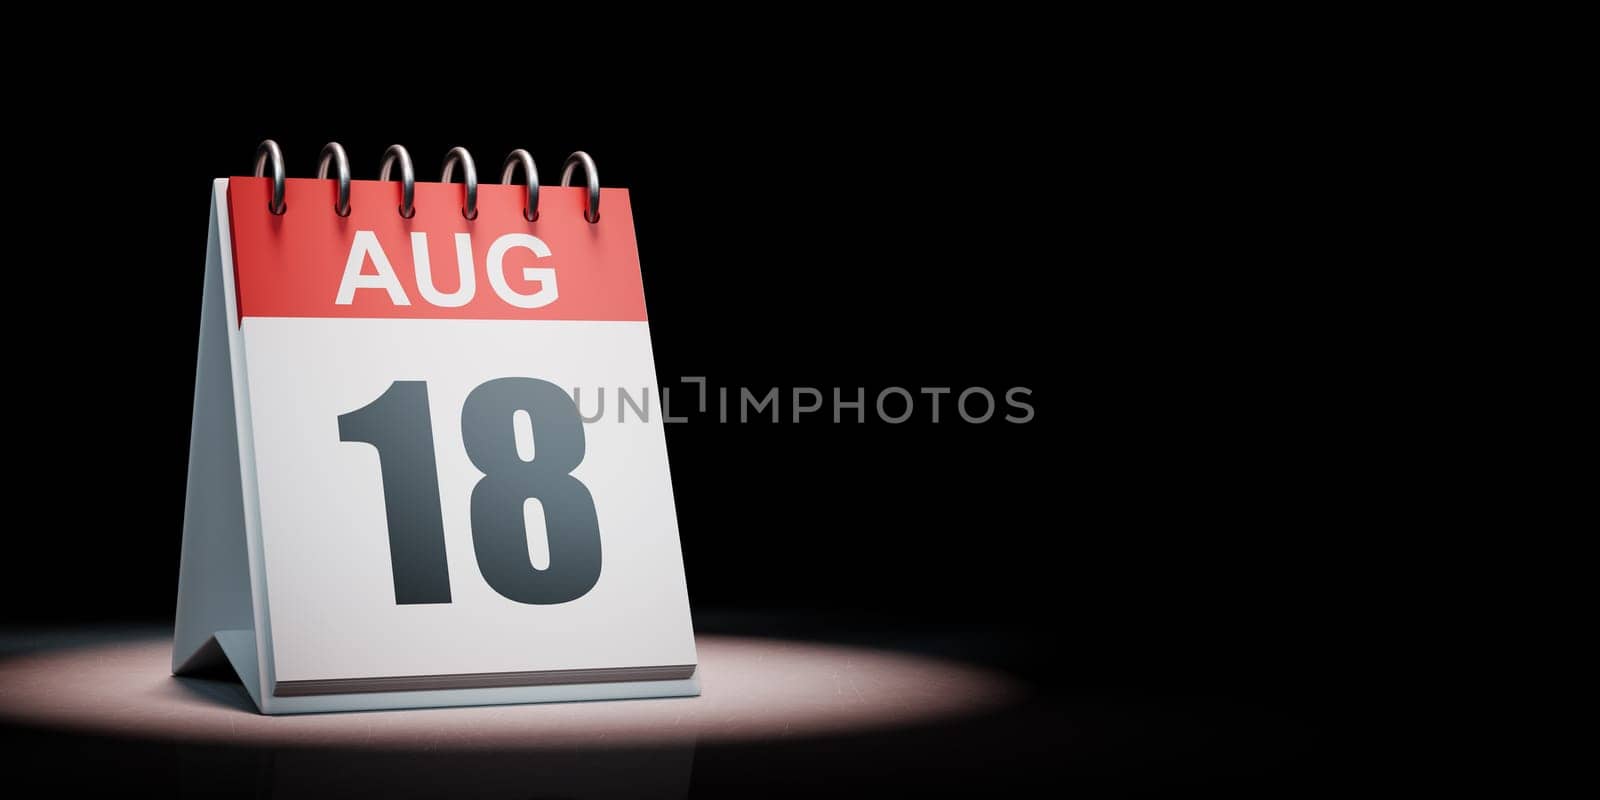 August 18 Calendar Spotlighted on Black Background by make